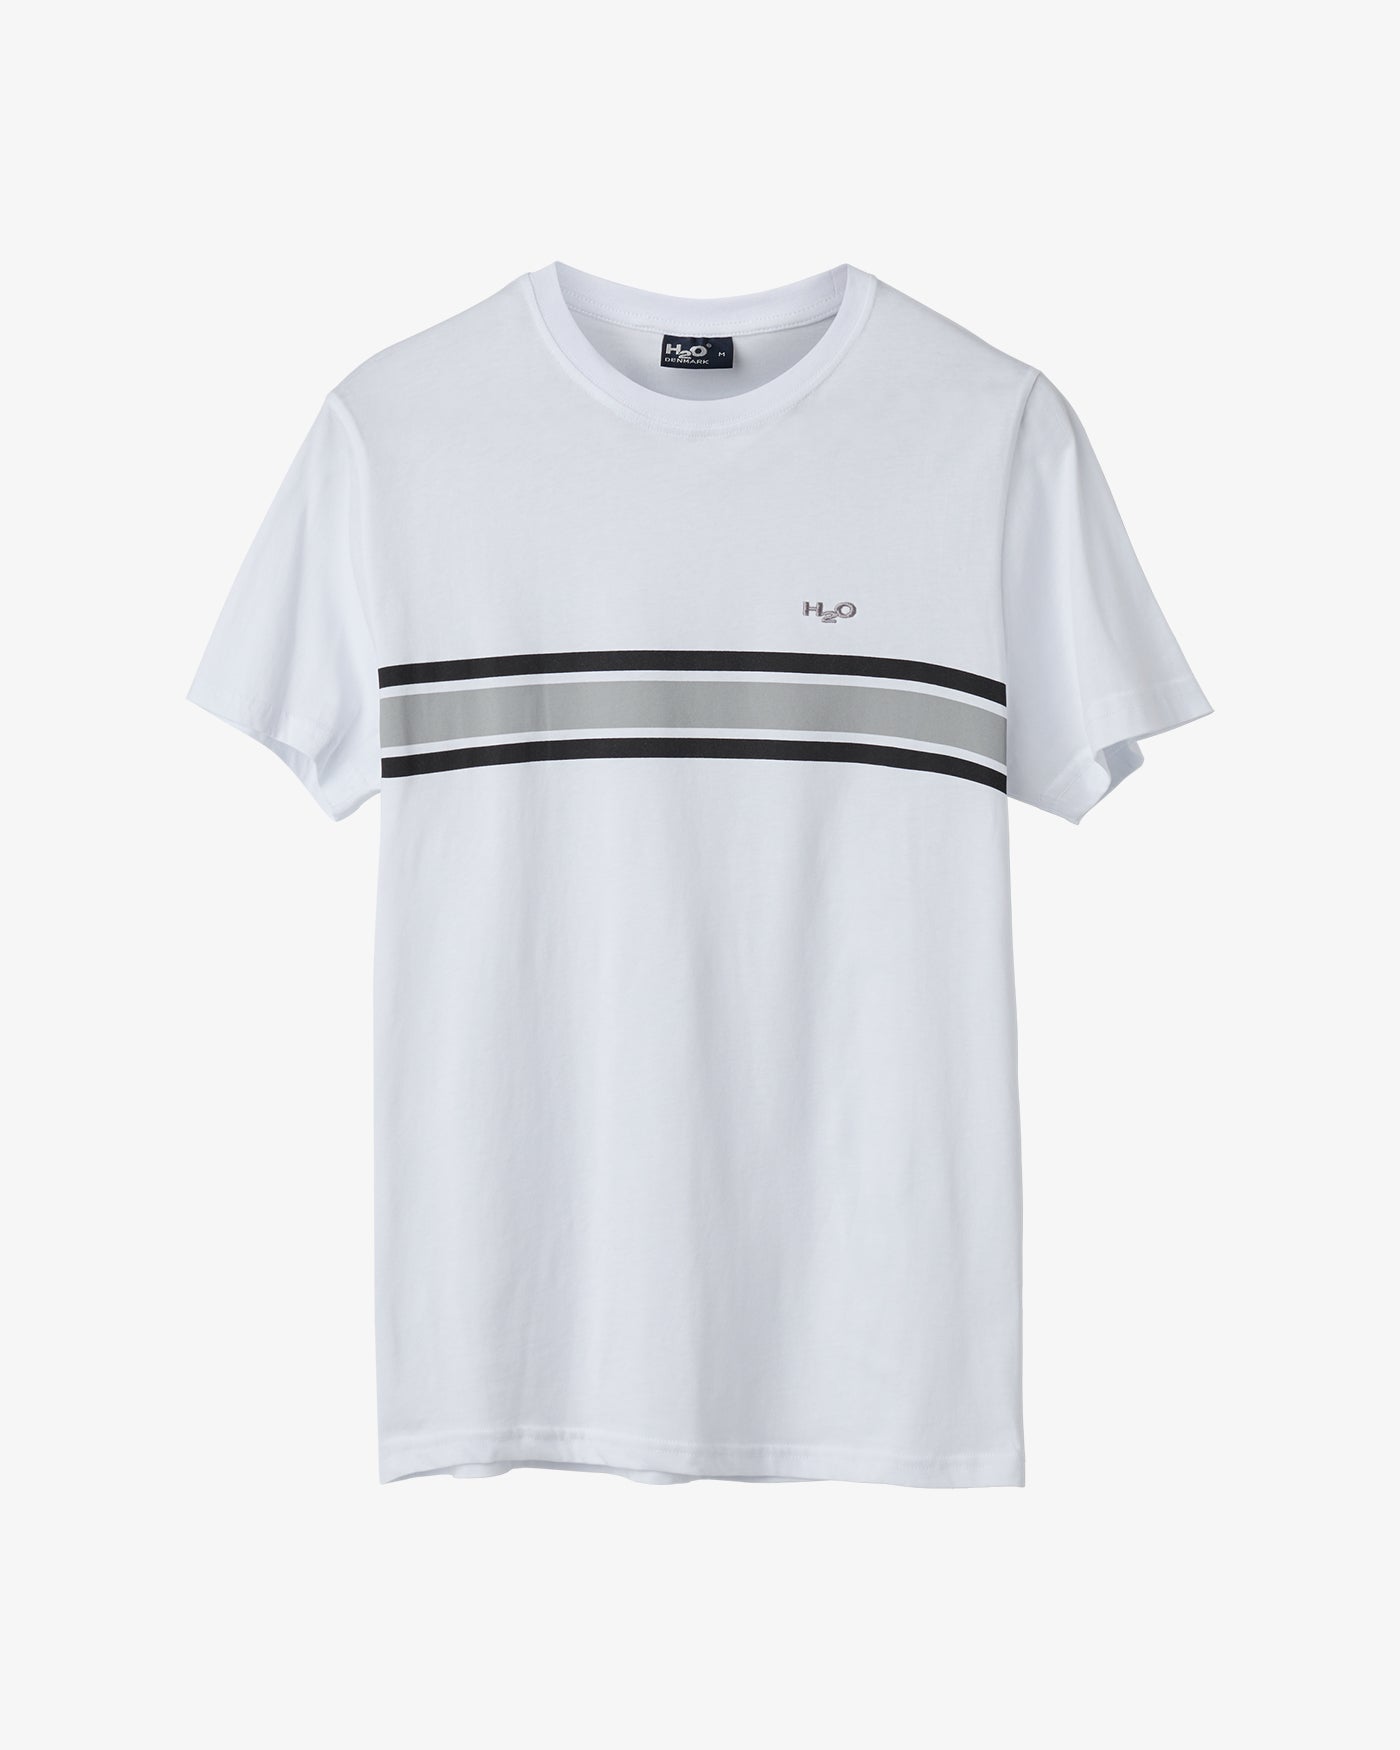 Gilleleje T-shirt Wmn - White/Black/Grey/Black